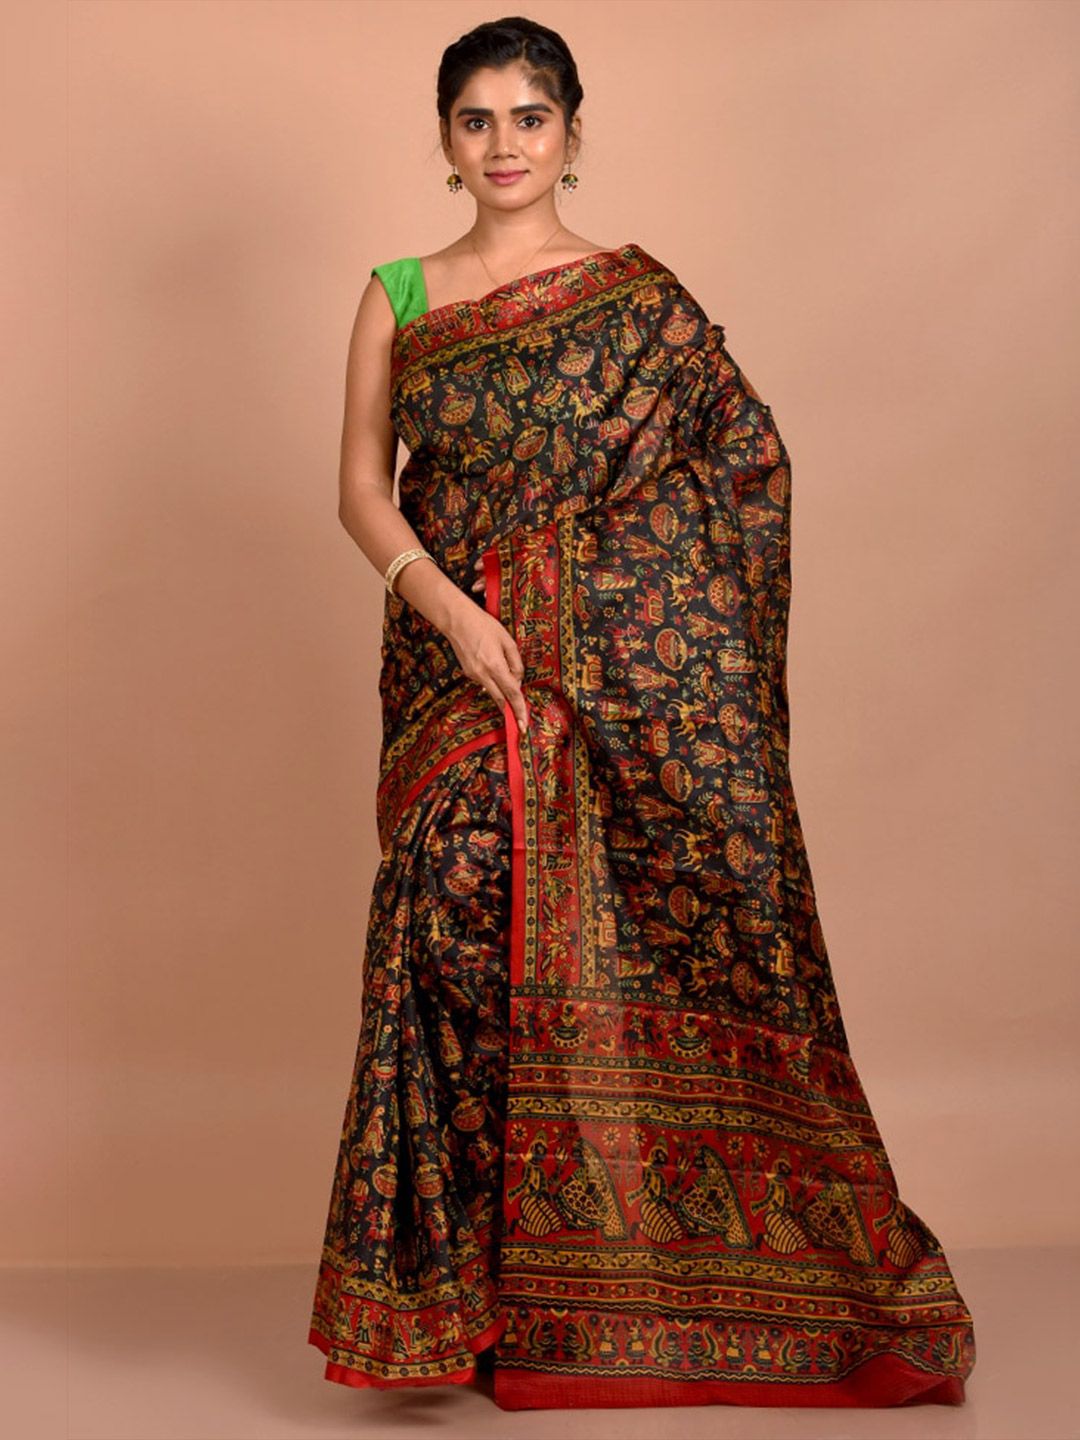 AllSilks Ethnic Motifs Printed Pure Silk Saree Price in India